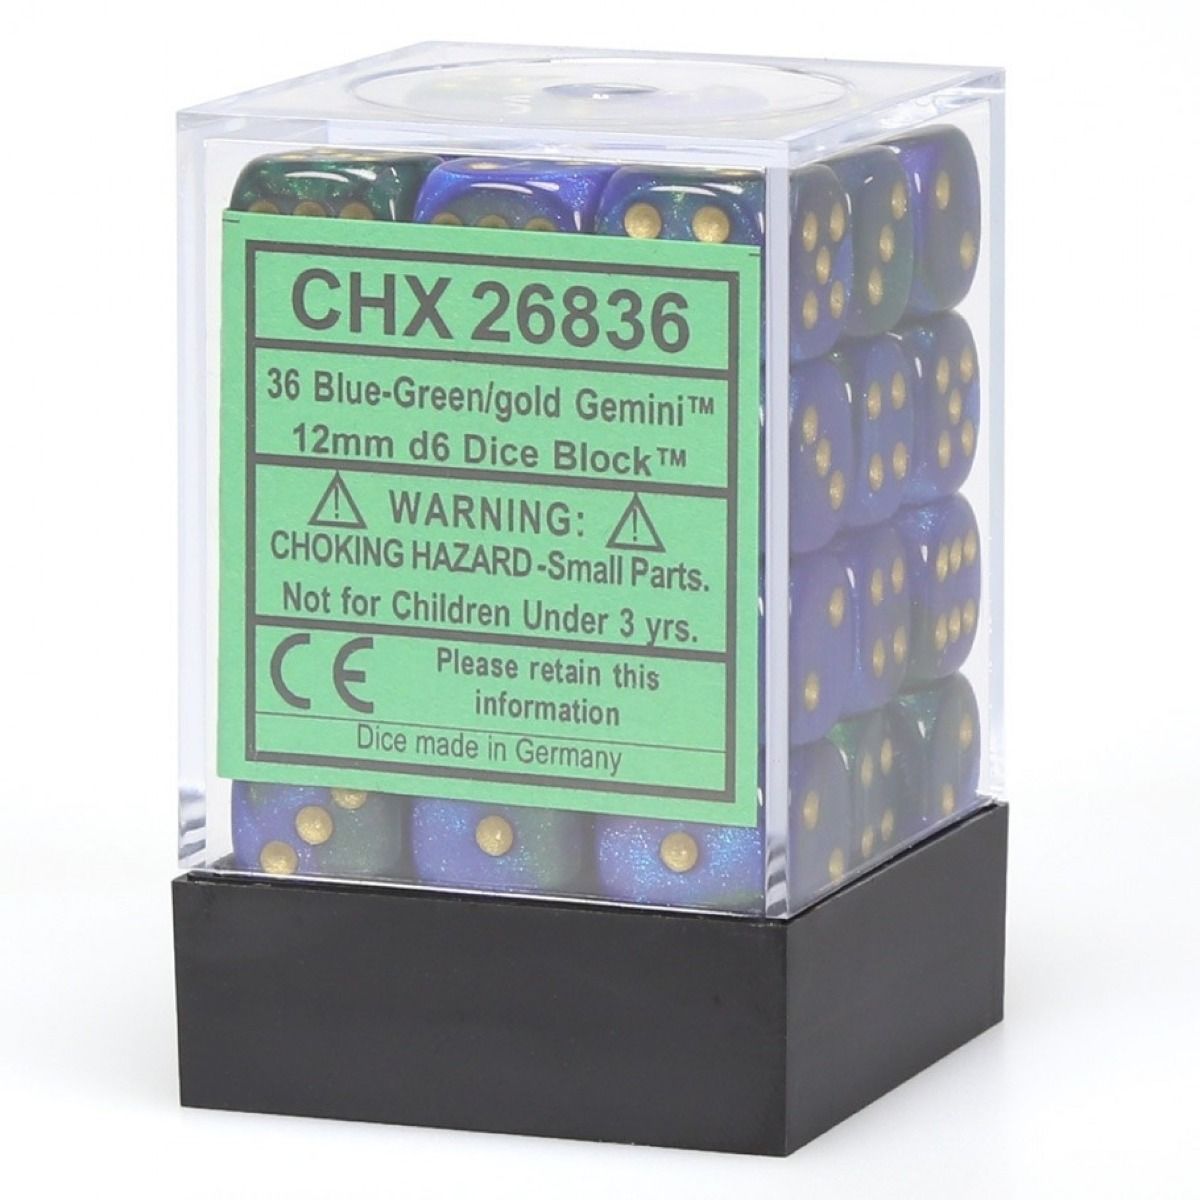 CHX 26836 Gemini 12mm d6 Blue-Green/Gold Block (36)